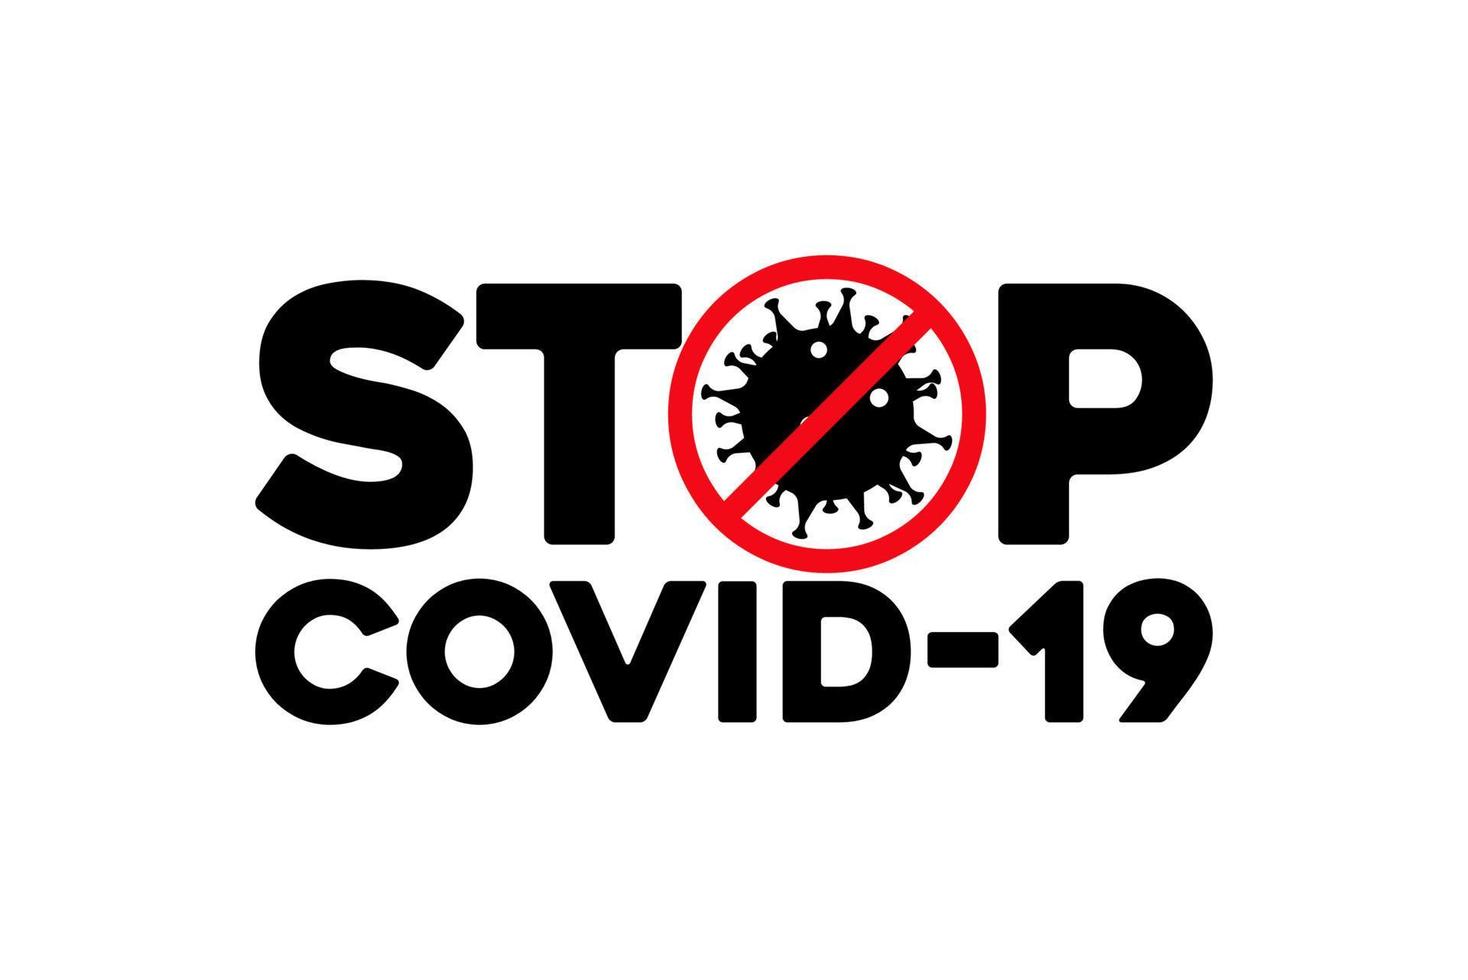 diseño del logotipo del coronavirus covid 19. covid19coronavirus vector